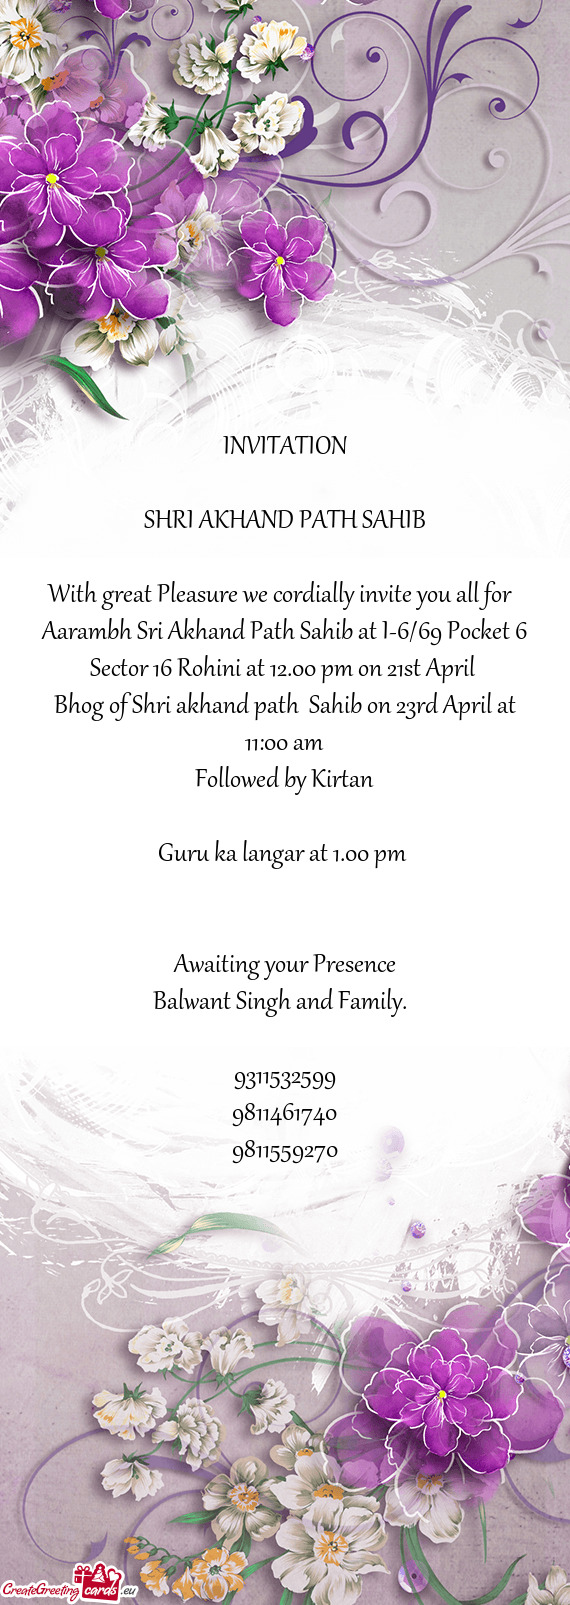 Aarambh Sri Akhand Path Sahib at I-6/69 Pocket 6 Sector 16 Rohini at 12.00 pm on 21st April